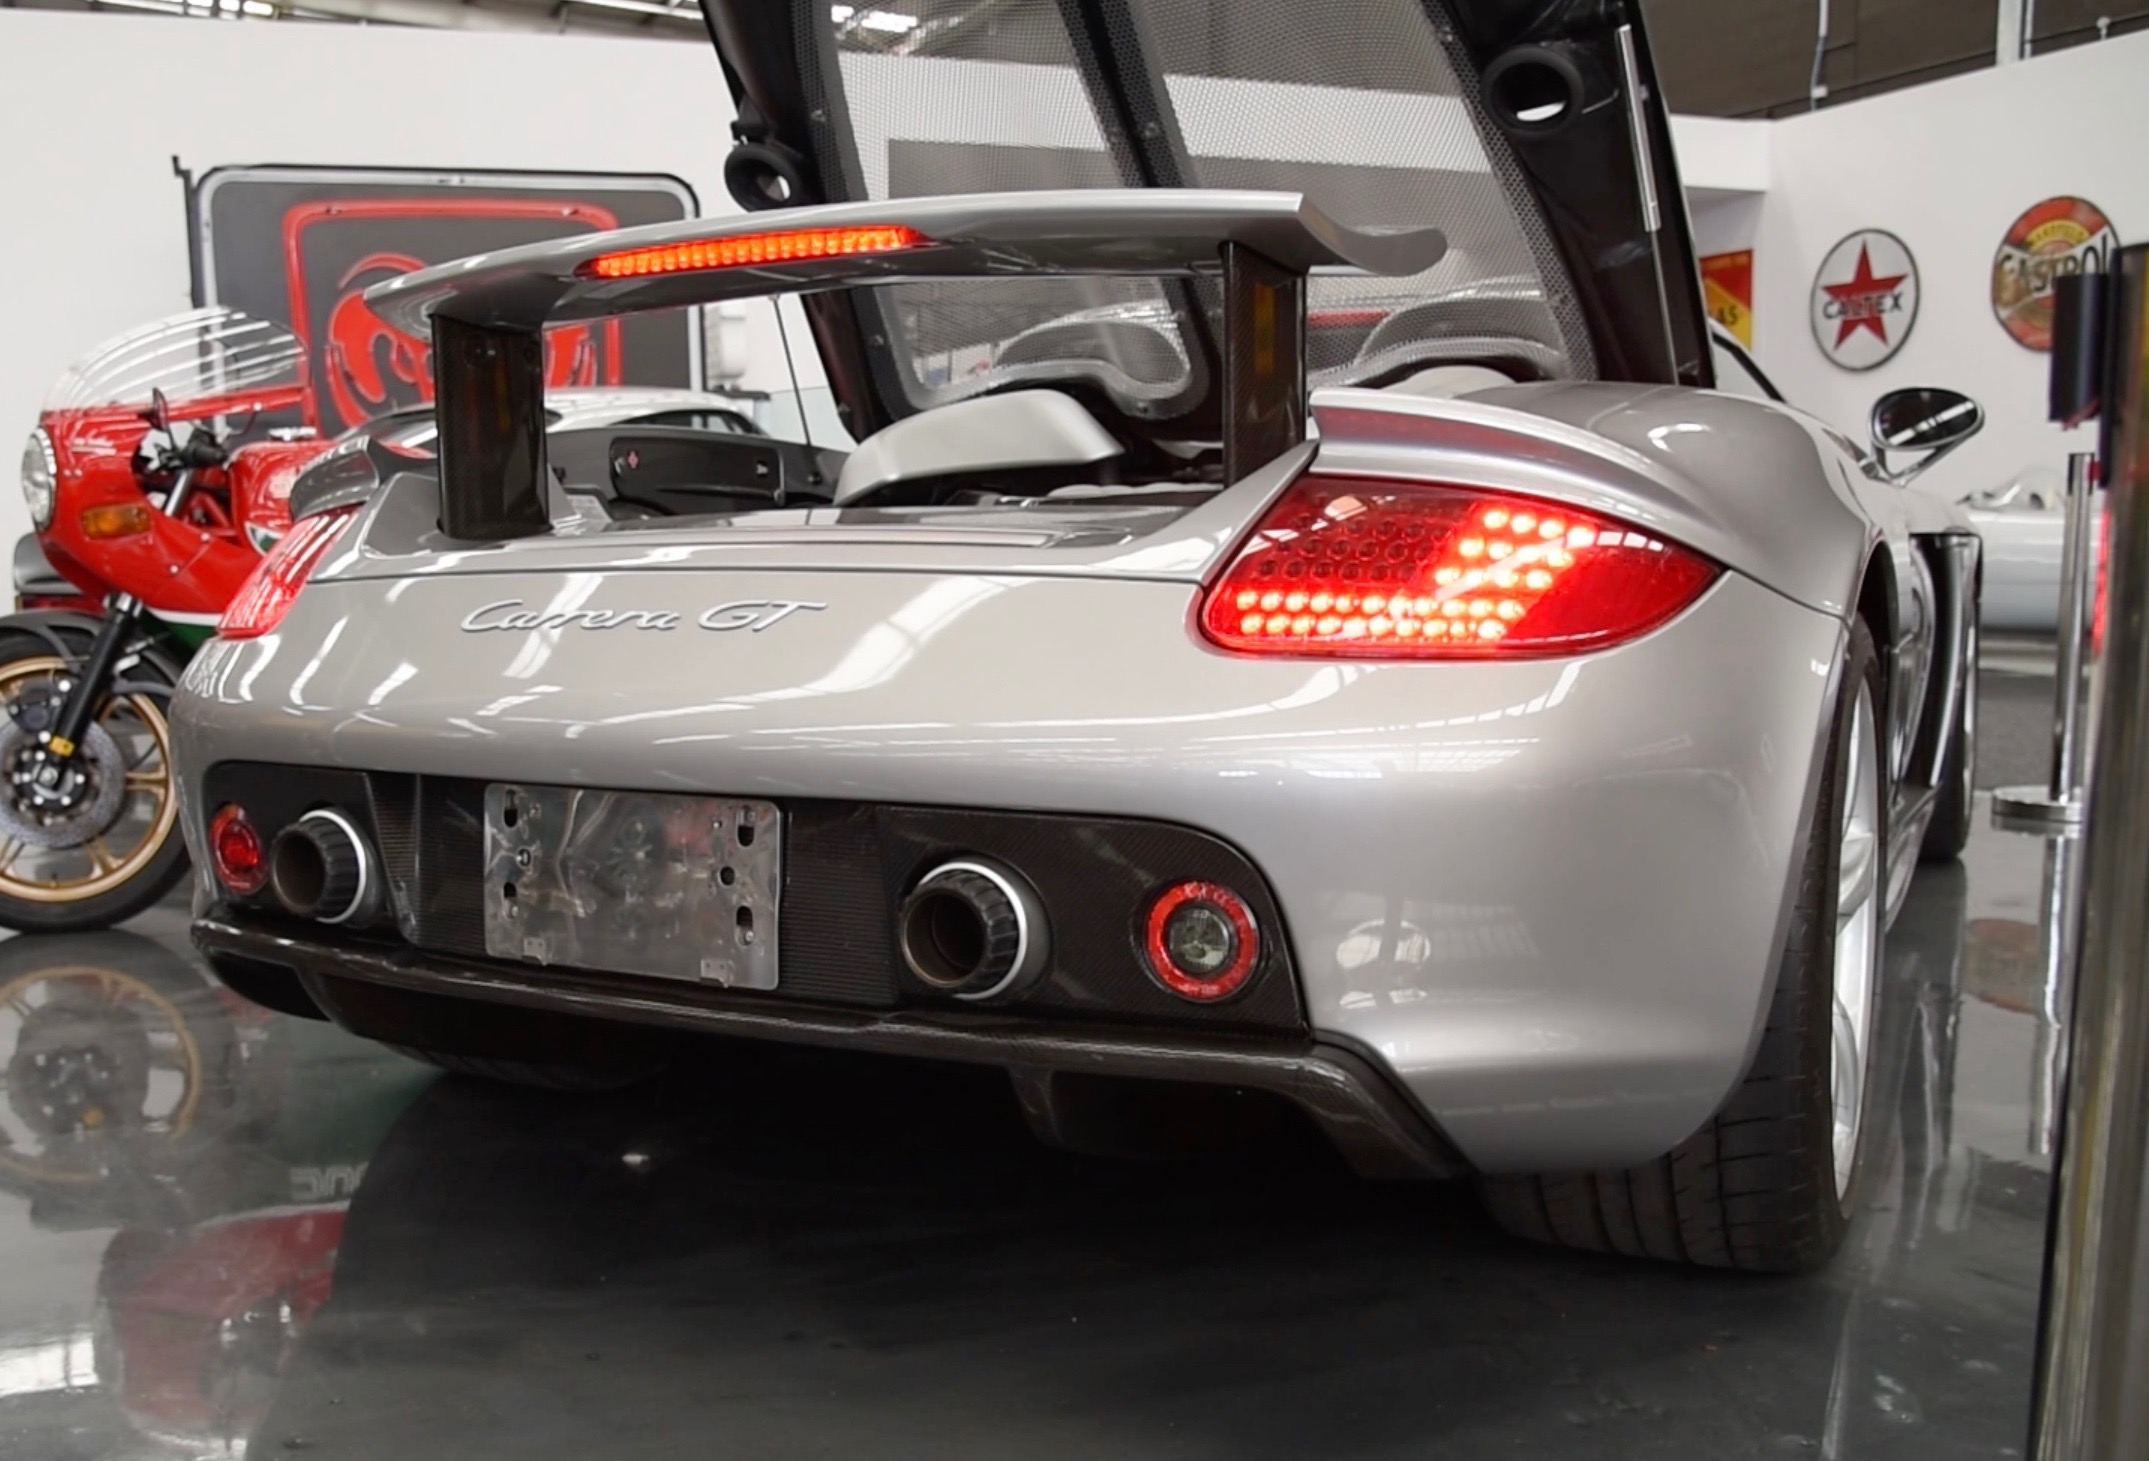 Video: Porsche Carrera GT engine sound start-up, idle and rev - Top10Cars